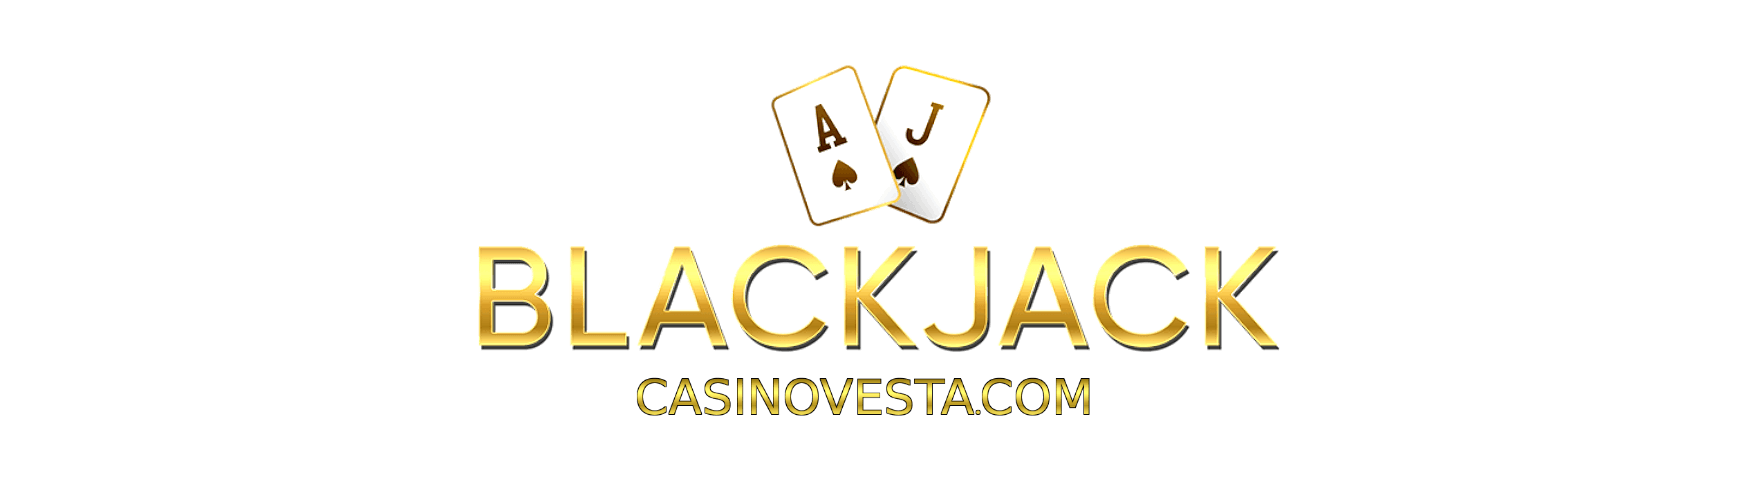 Online Blackjack CasinoVesta.com